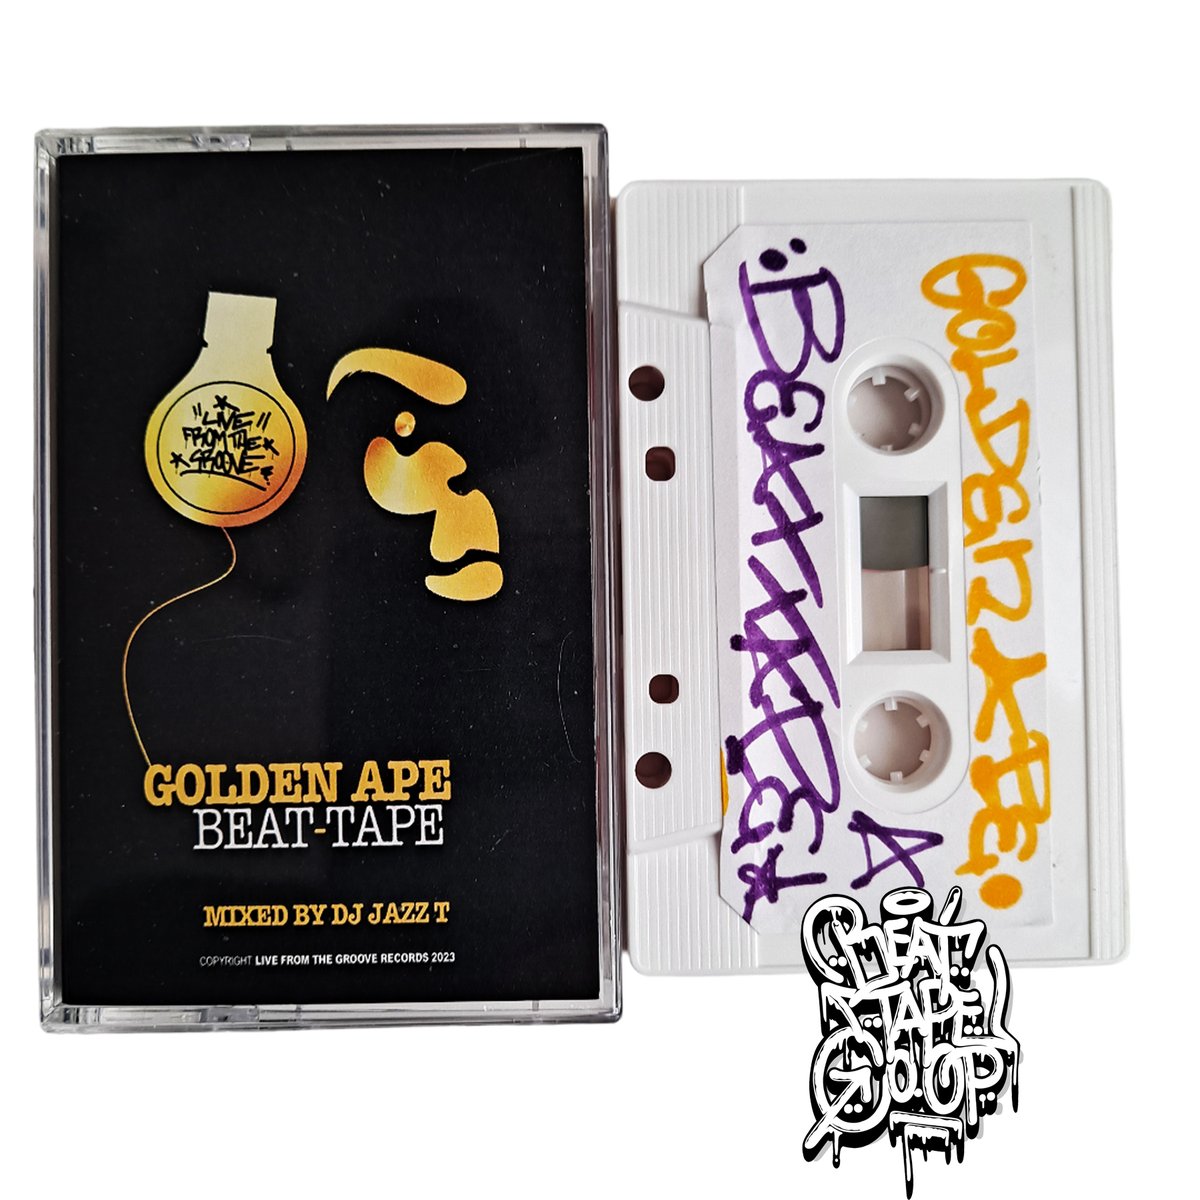 Live From The Groove - The Golden Ape Beat Tape - Mixed by DJ Jazz T
Released On: May 15, 2023
Bandcamp: livefromthegroove.bandcamp.com/album/the-gold…

#LiveFromTheGroove #DJJazzT #VariousProducers #BeatTape #Mixtape #Gadget #GrandHuit #Kuartz #DPiff #ConbelEvrence #Dweller #ChillaNinja #Mazzini